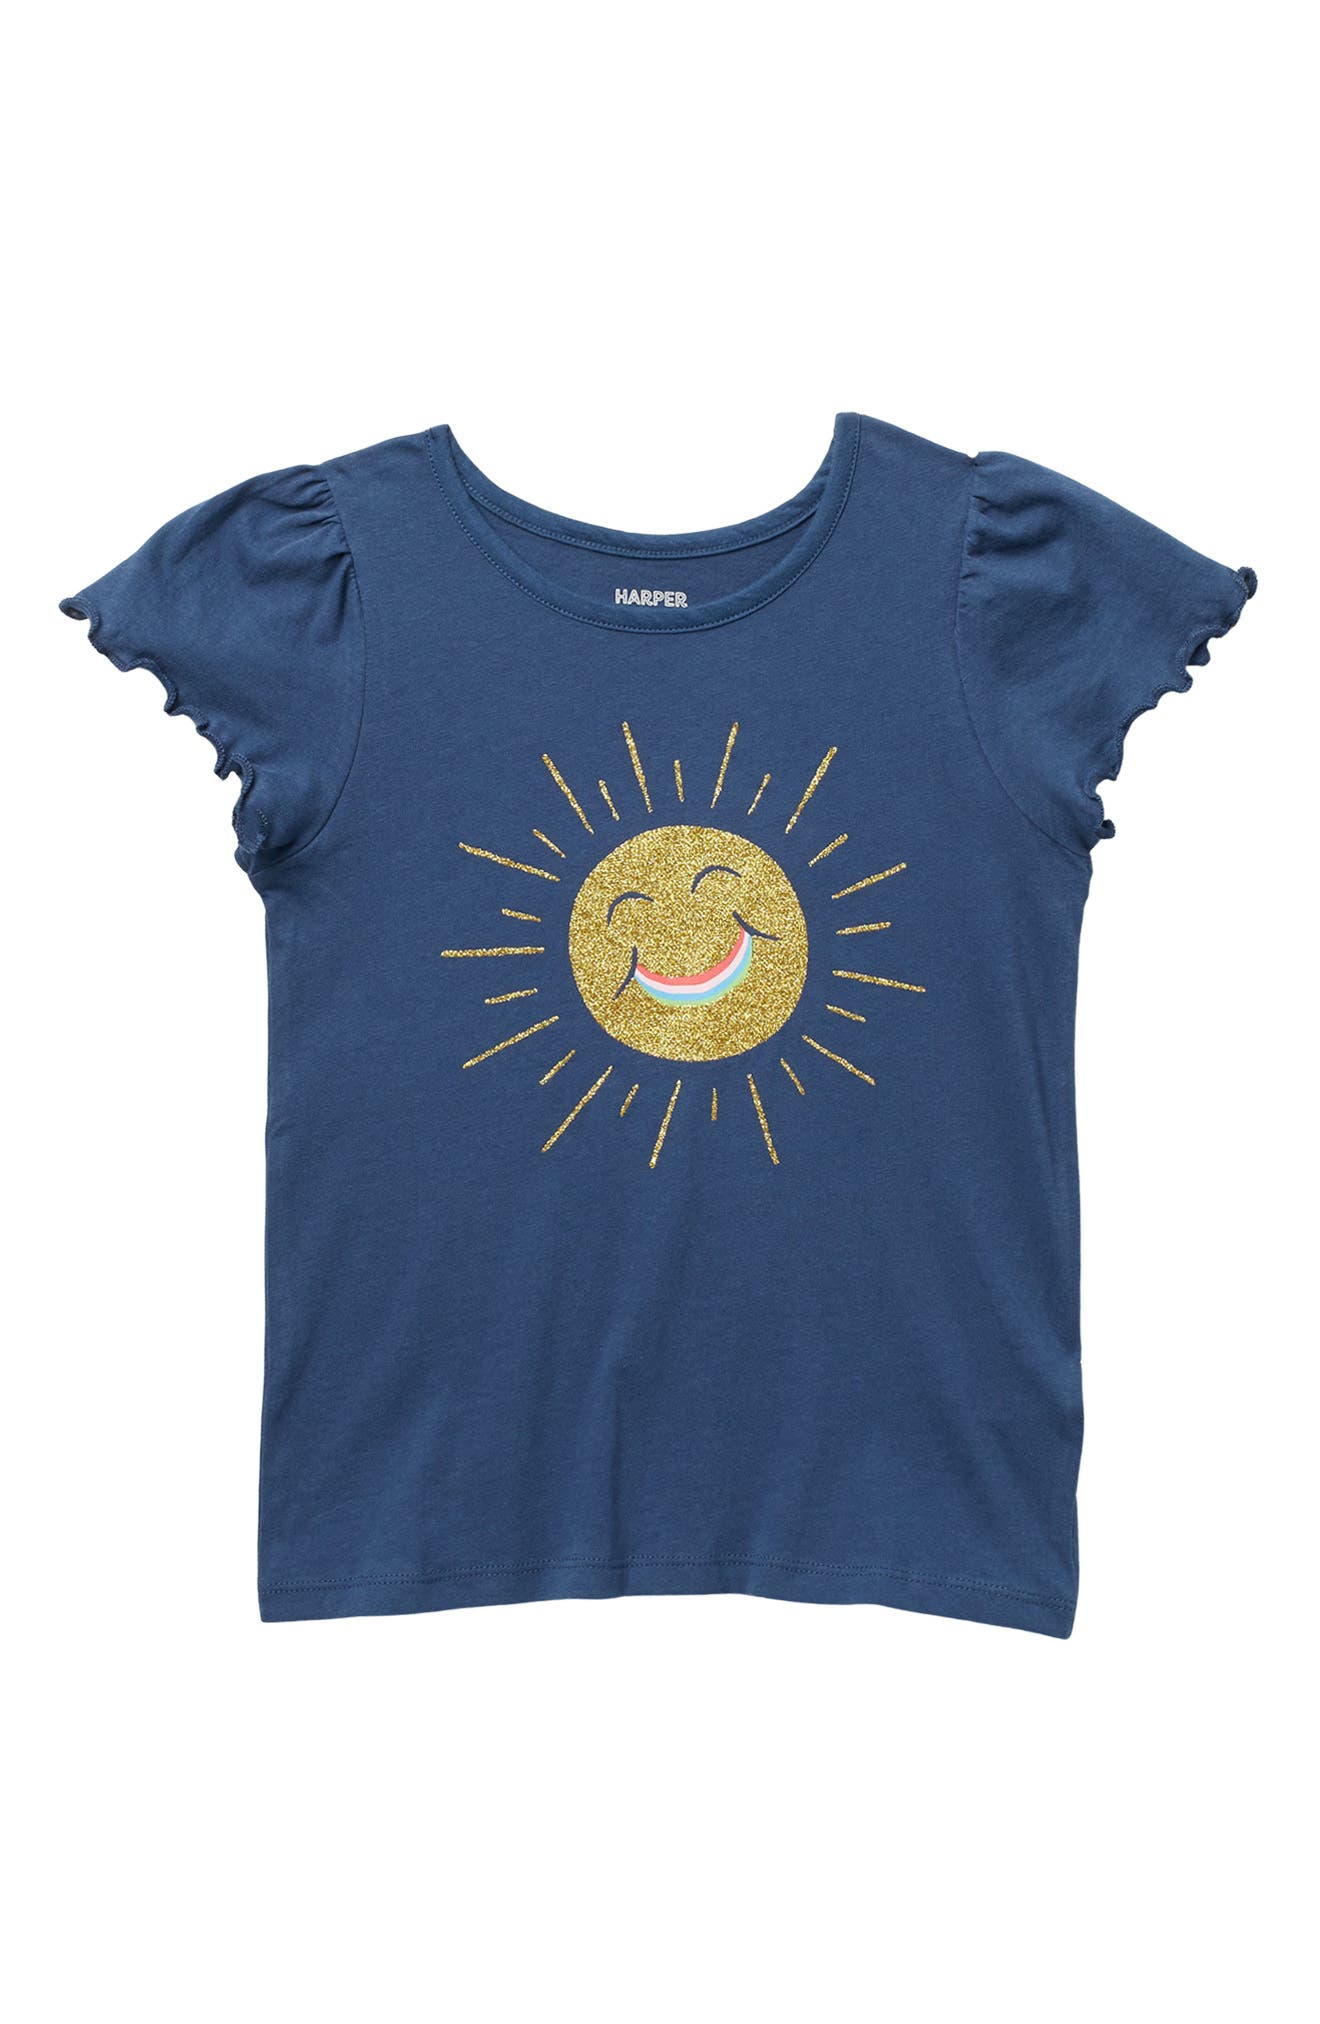 Harper Canyon Kids' Graphic T-shirt In Navy Denim Sparkle Sun